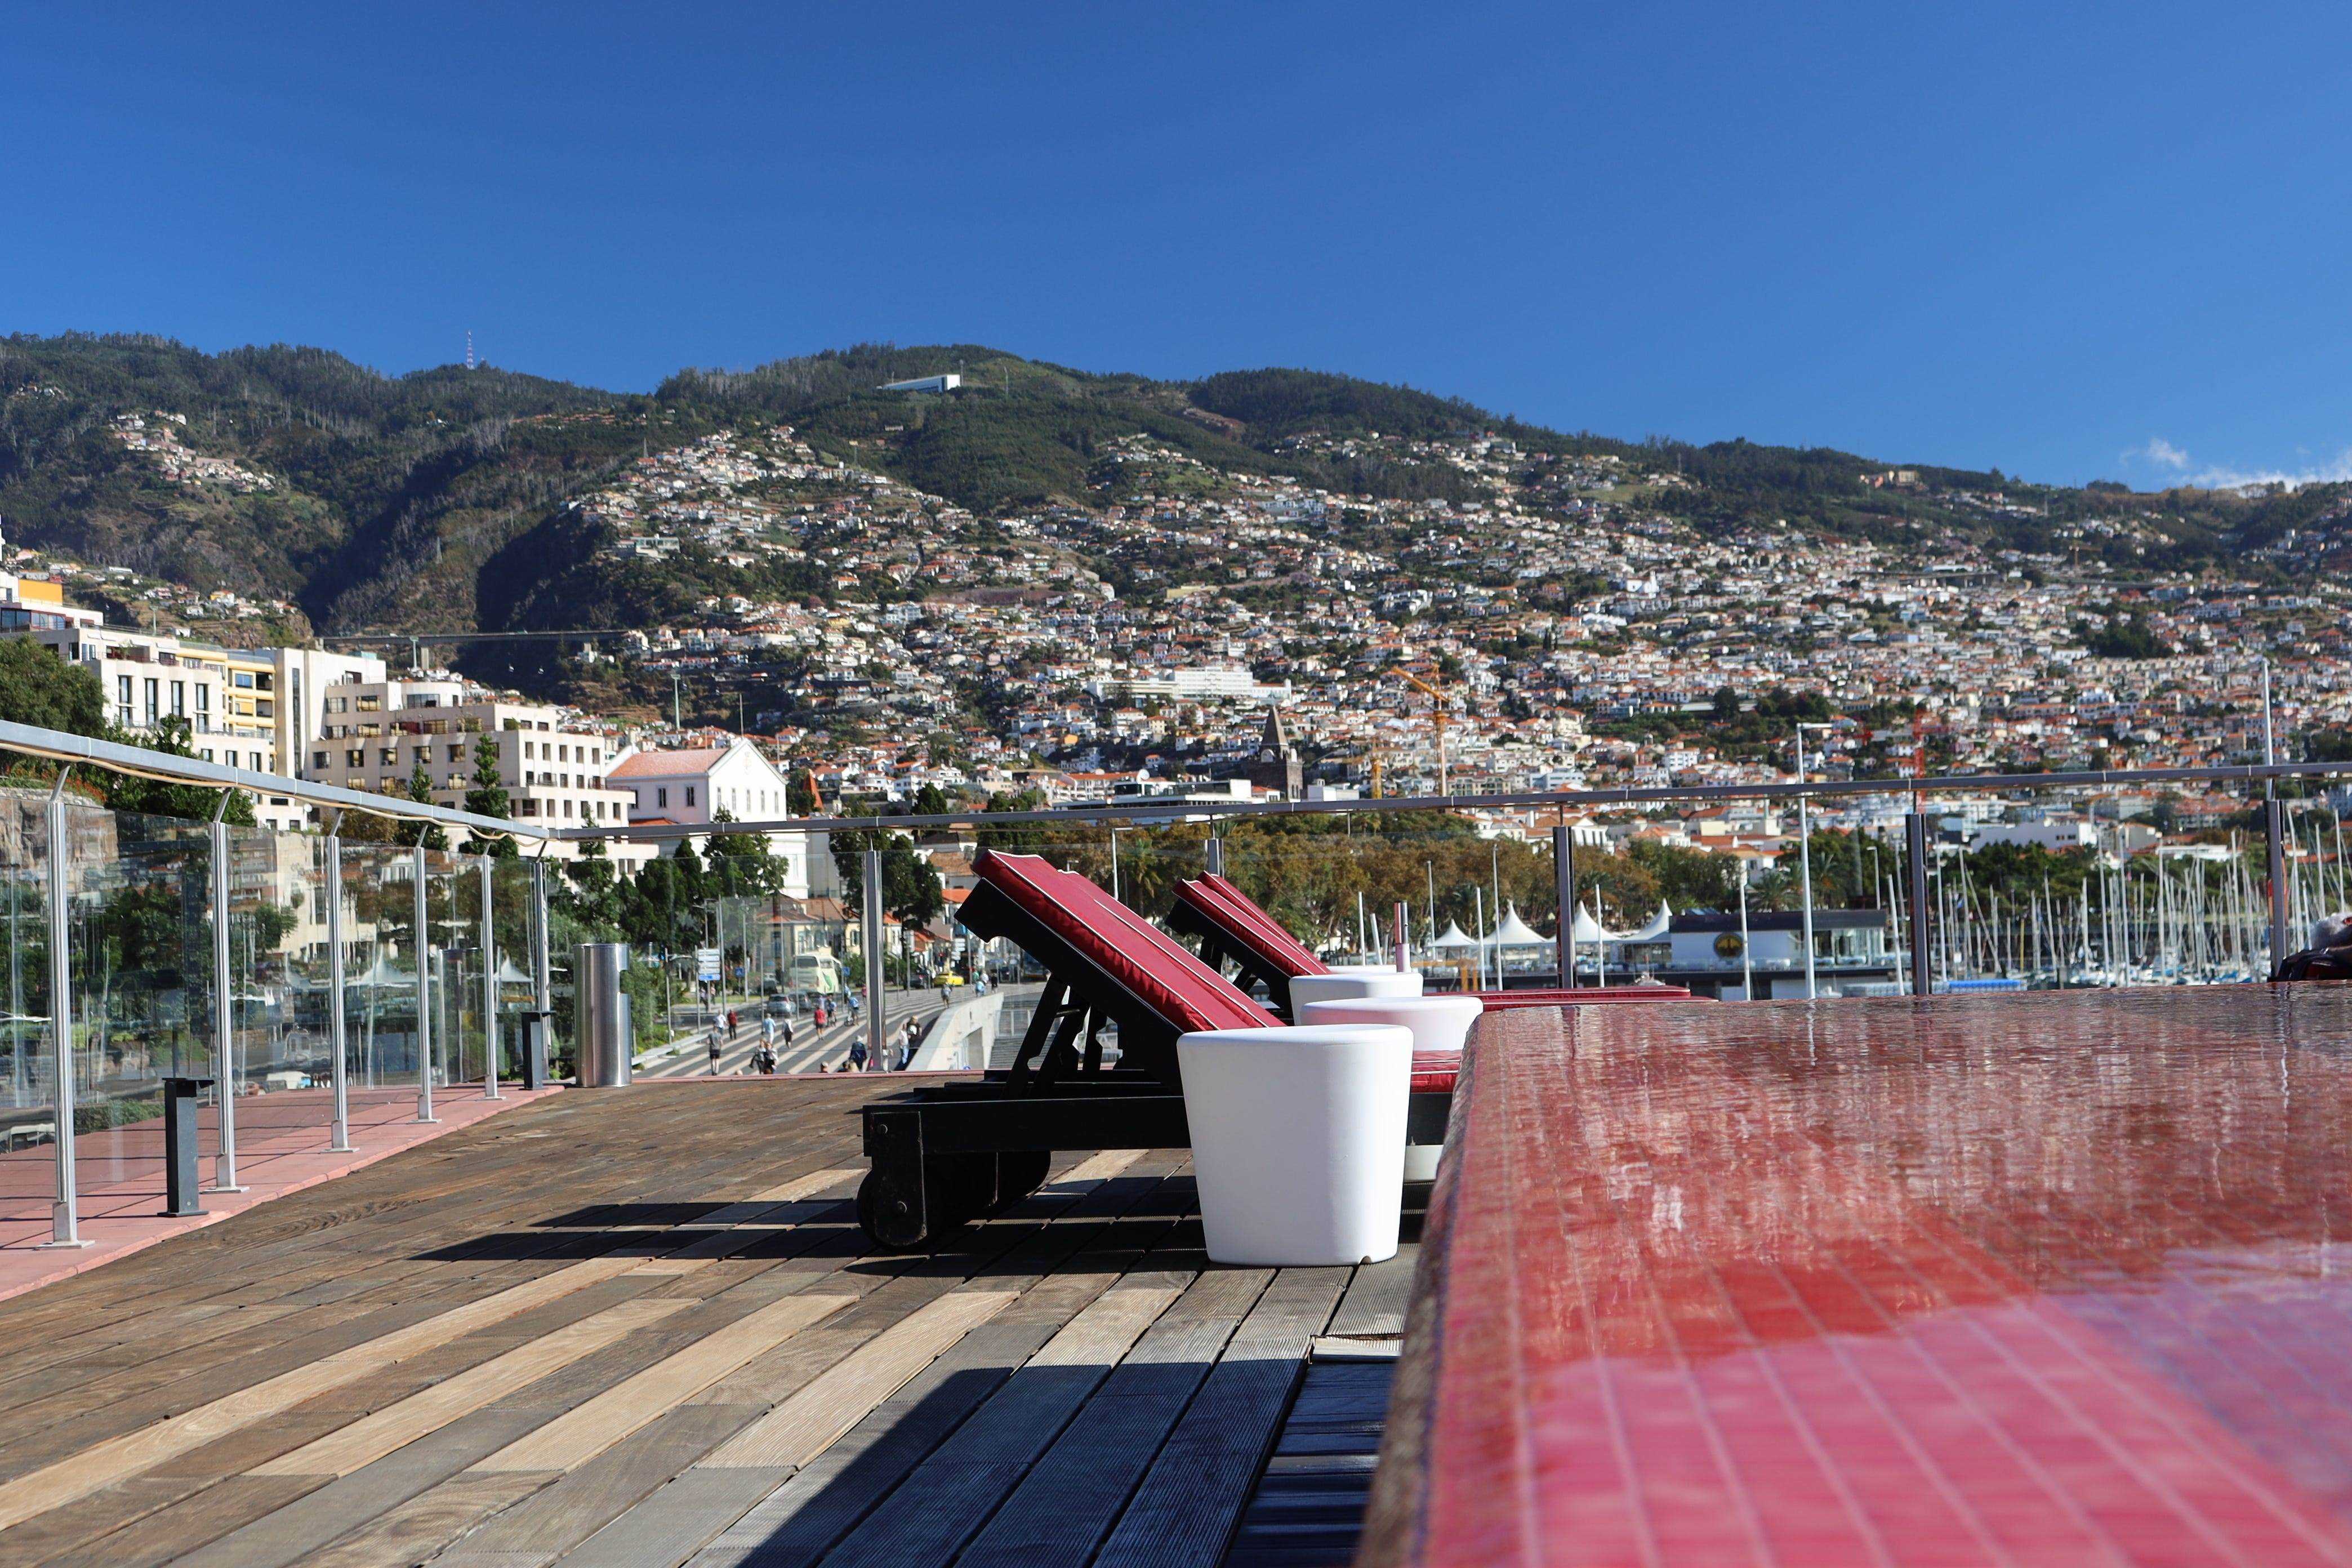 Blick auf den Pool von Cristiano Ronaldos Hotel in Funchal